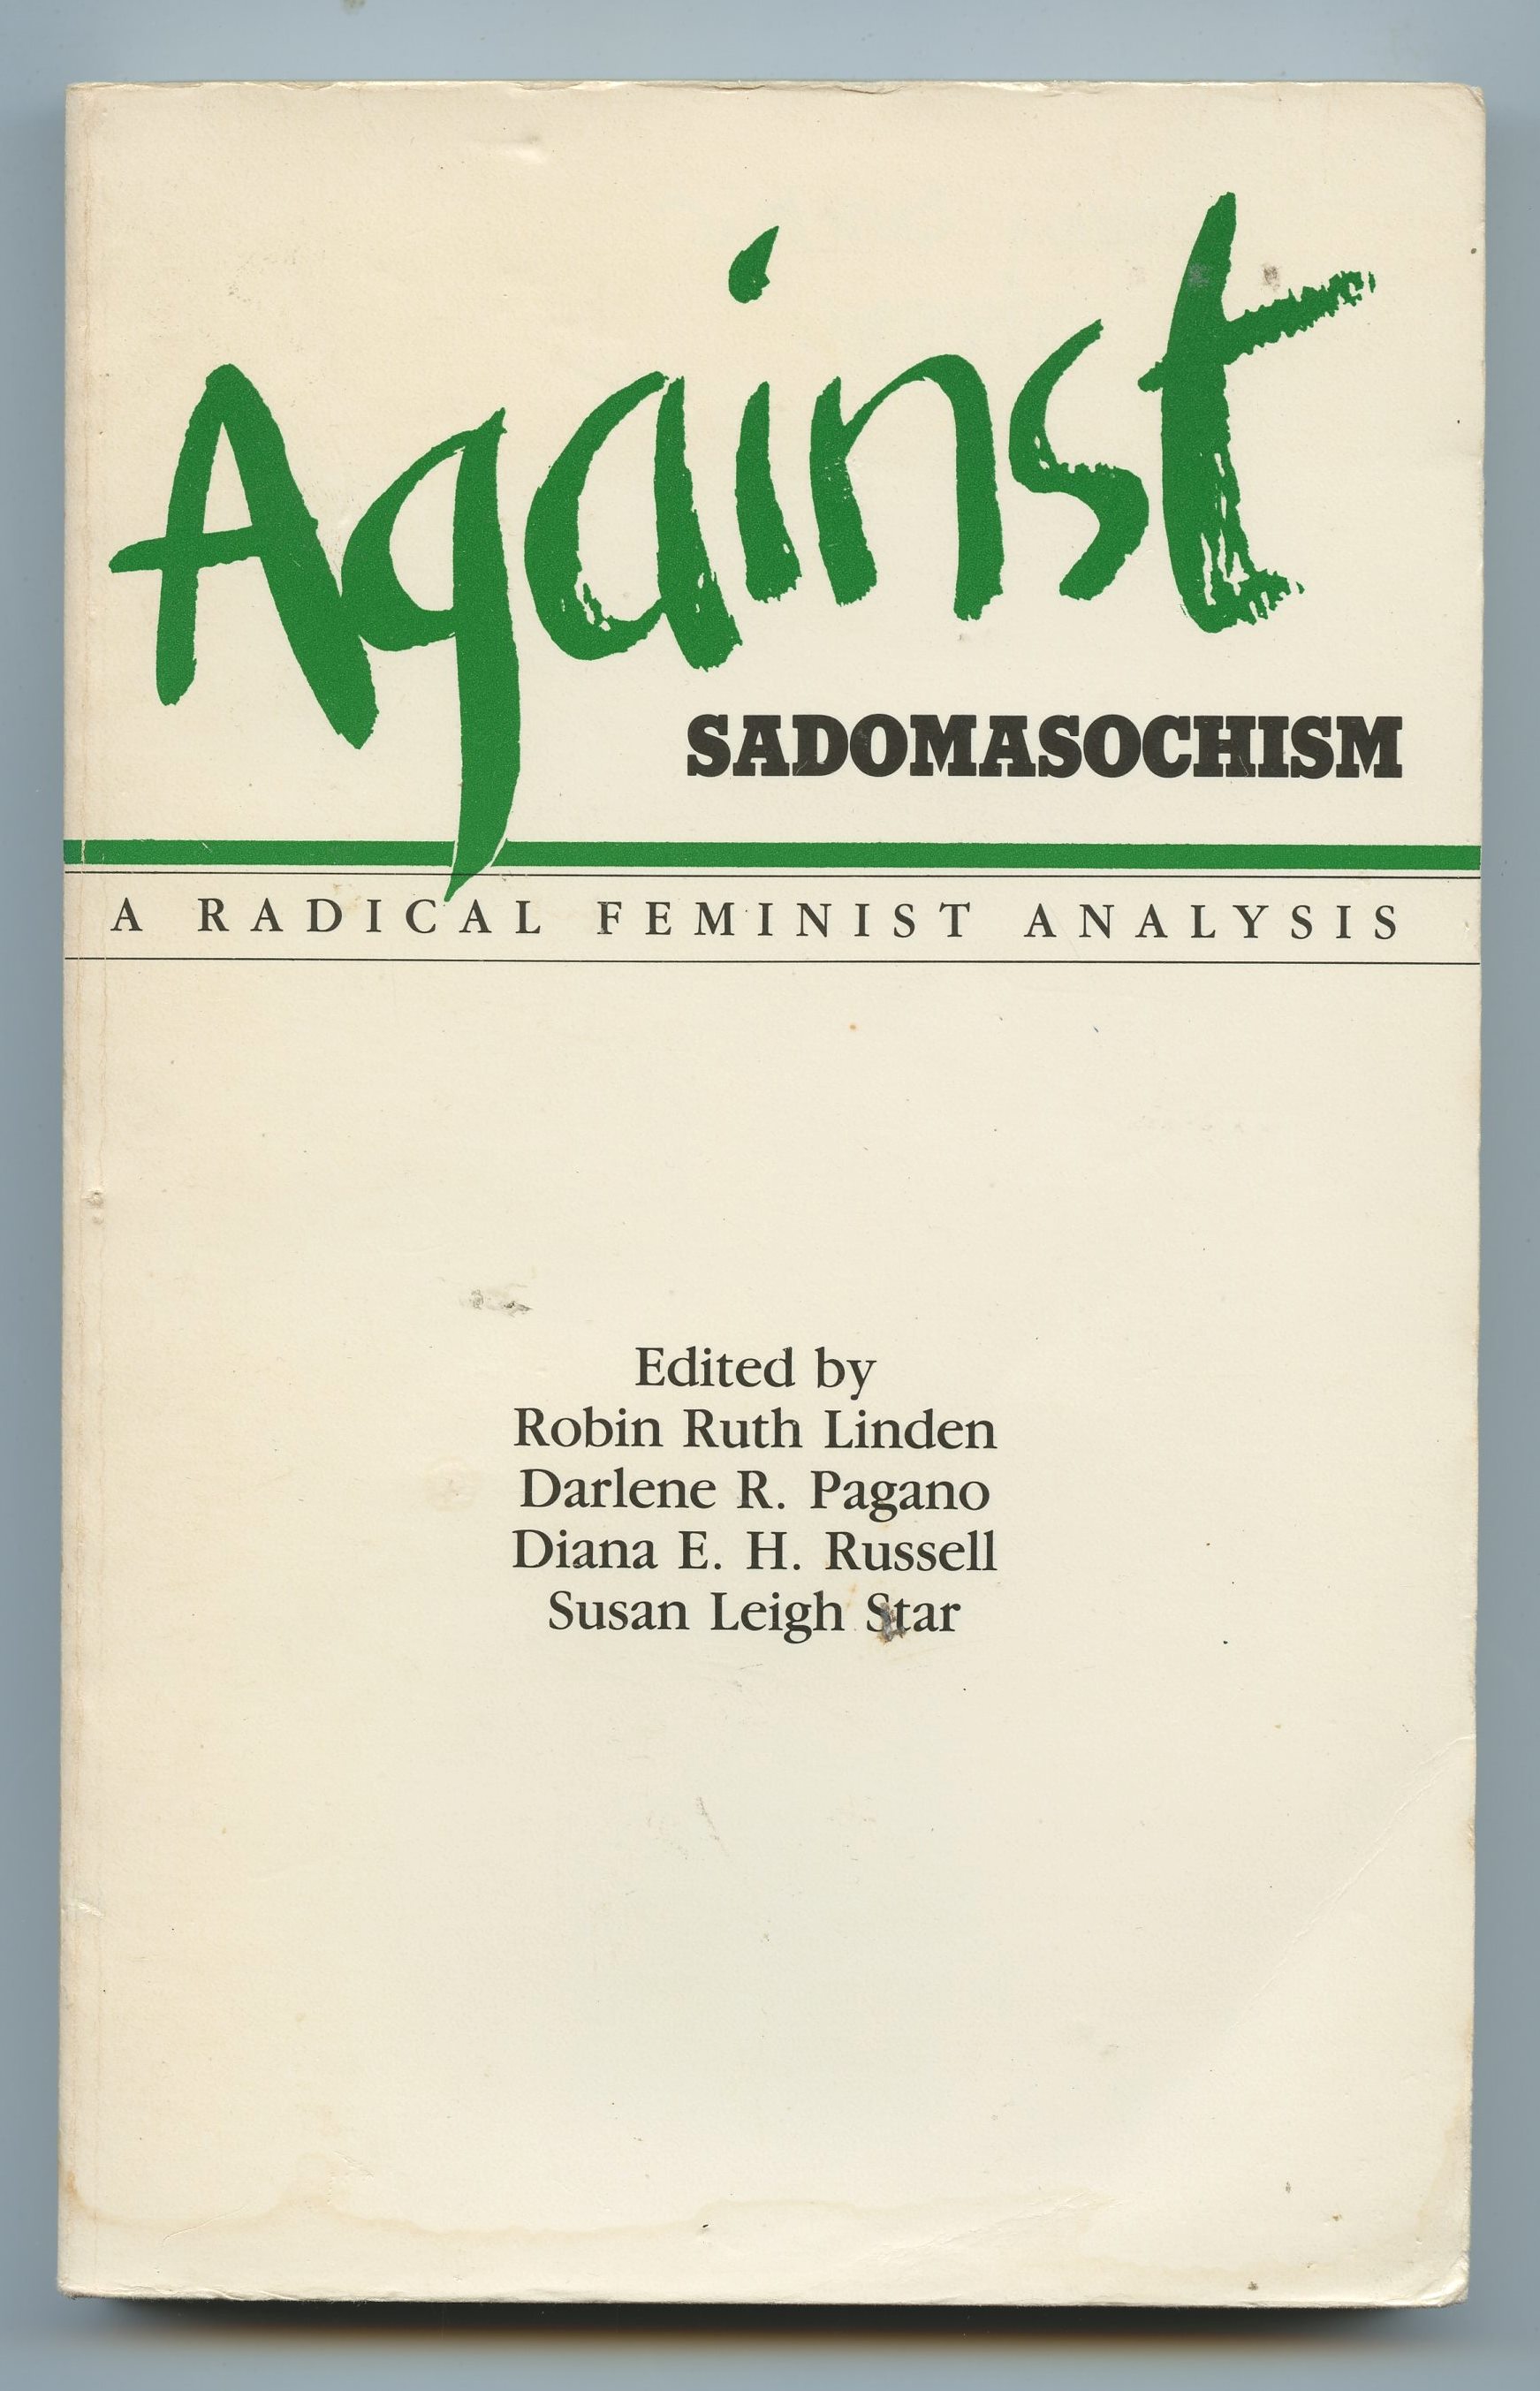 Against Sadomasochism: a Radical Feminist Analysis - LINDEN, Robin Ruth, et al (eds.)